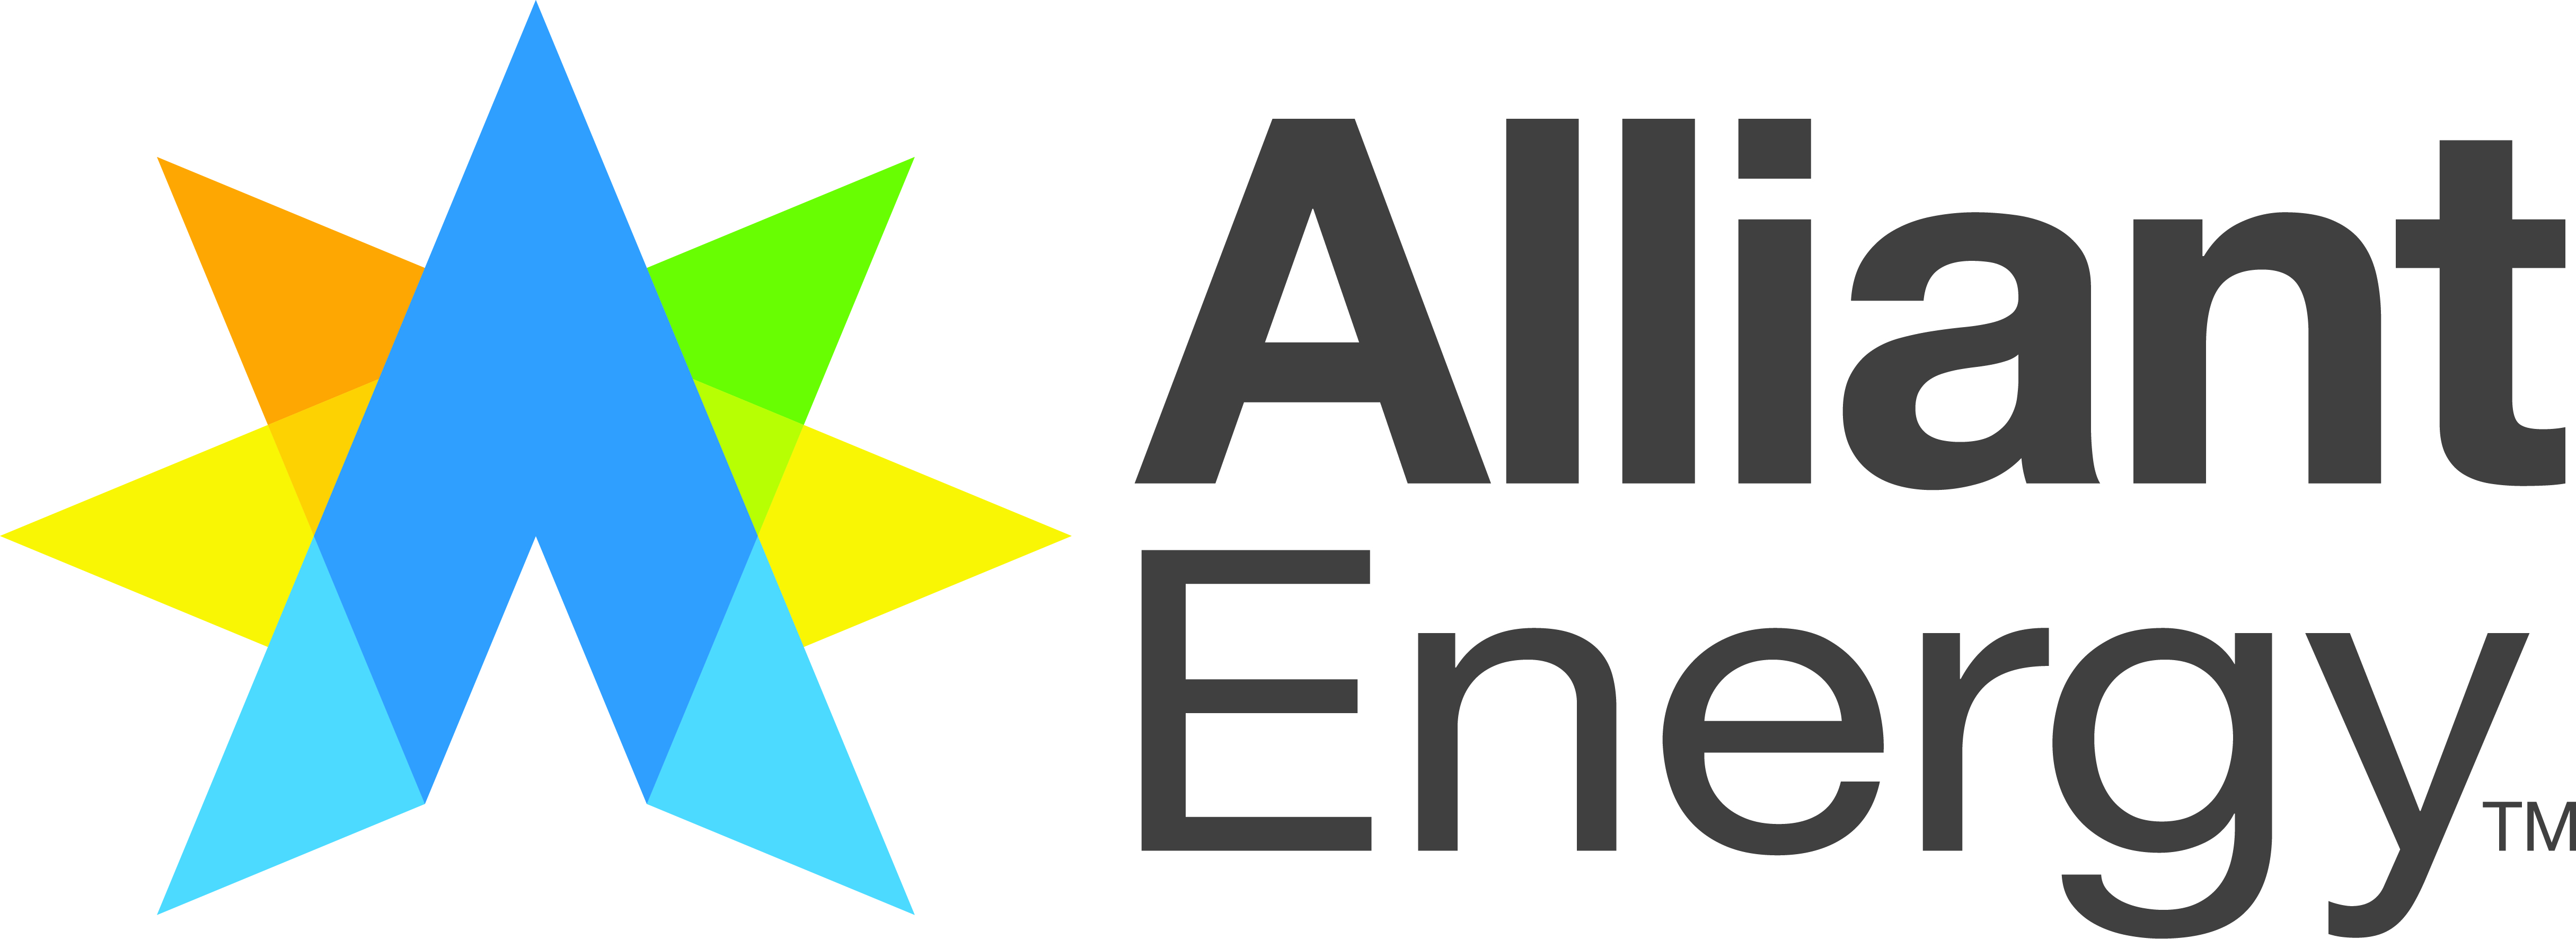 Alliant Energy Corporation